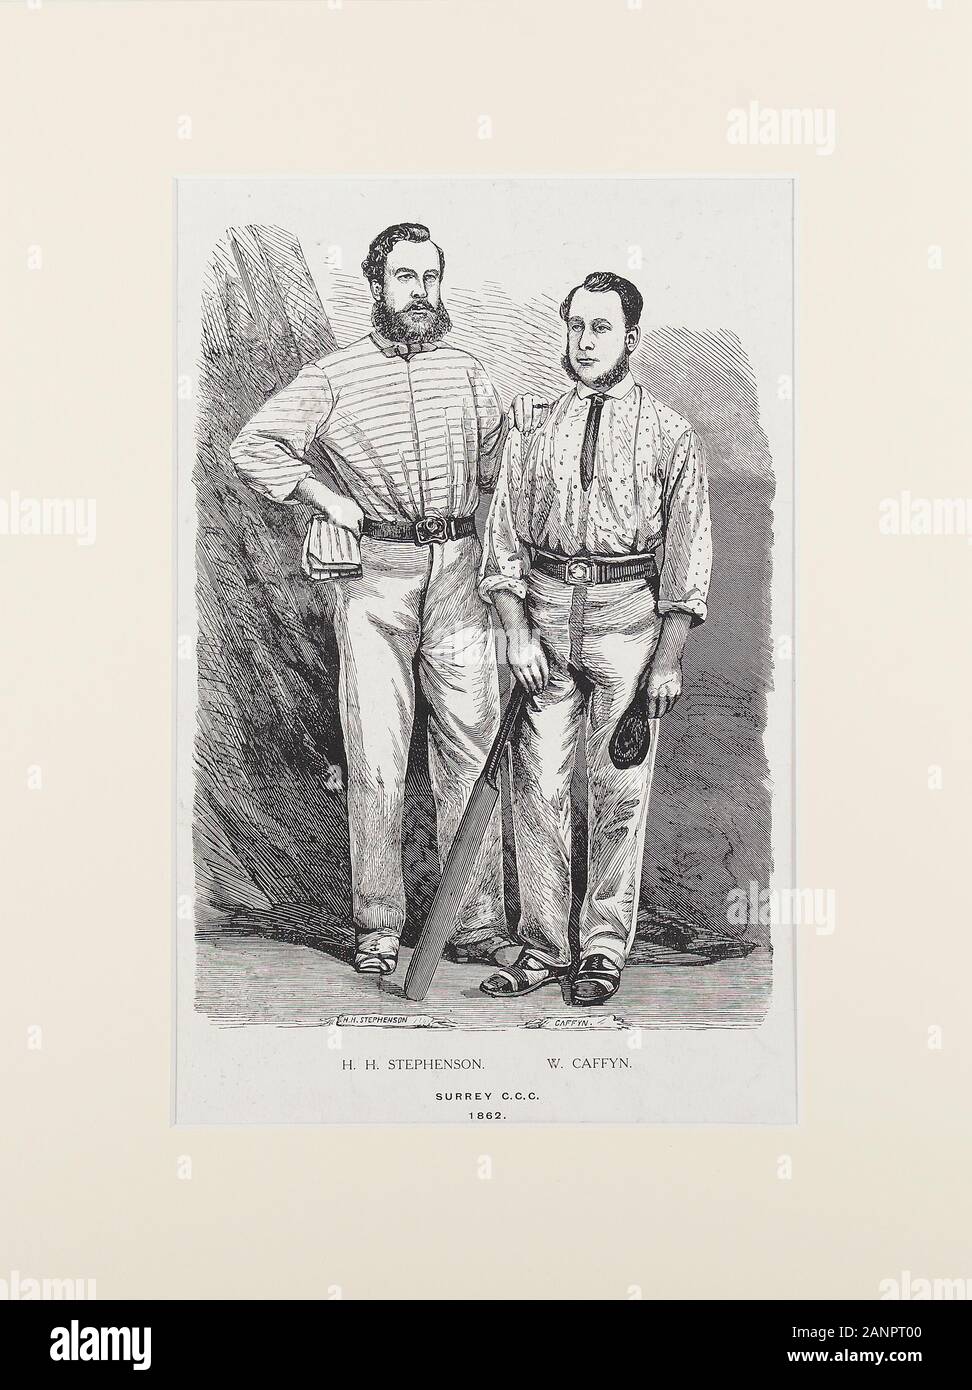 H. H. Stephenson and W. Caffyn Surrey c.c.c 1862 Stock Photo